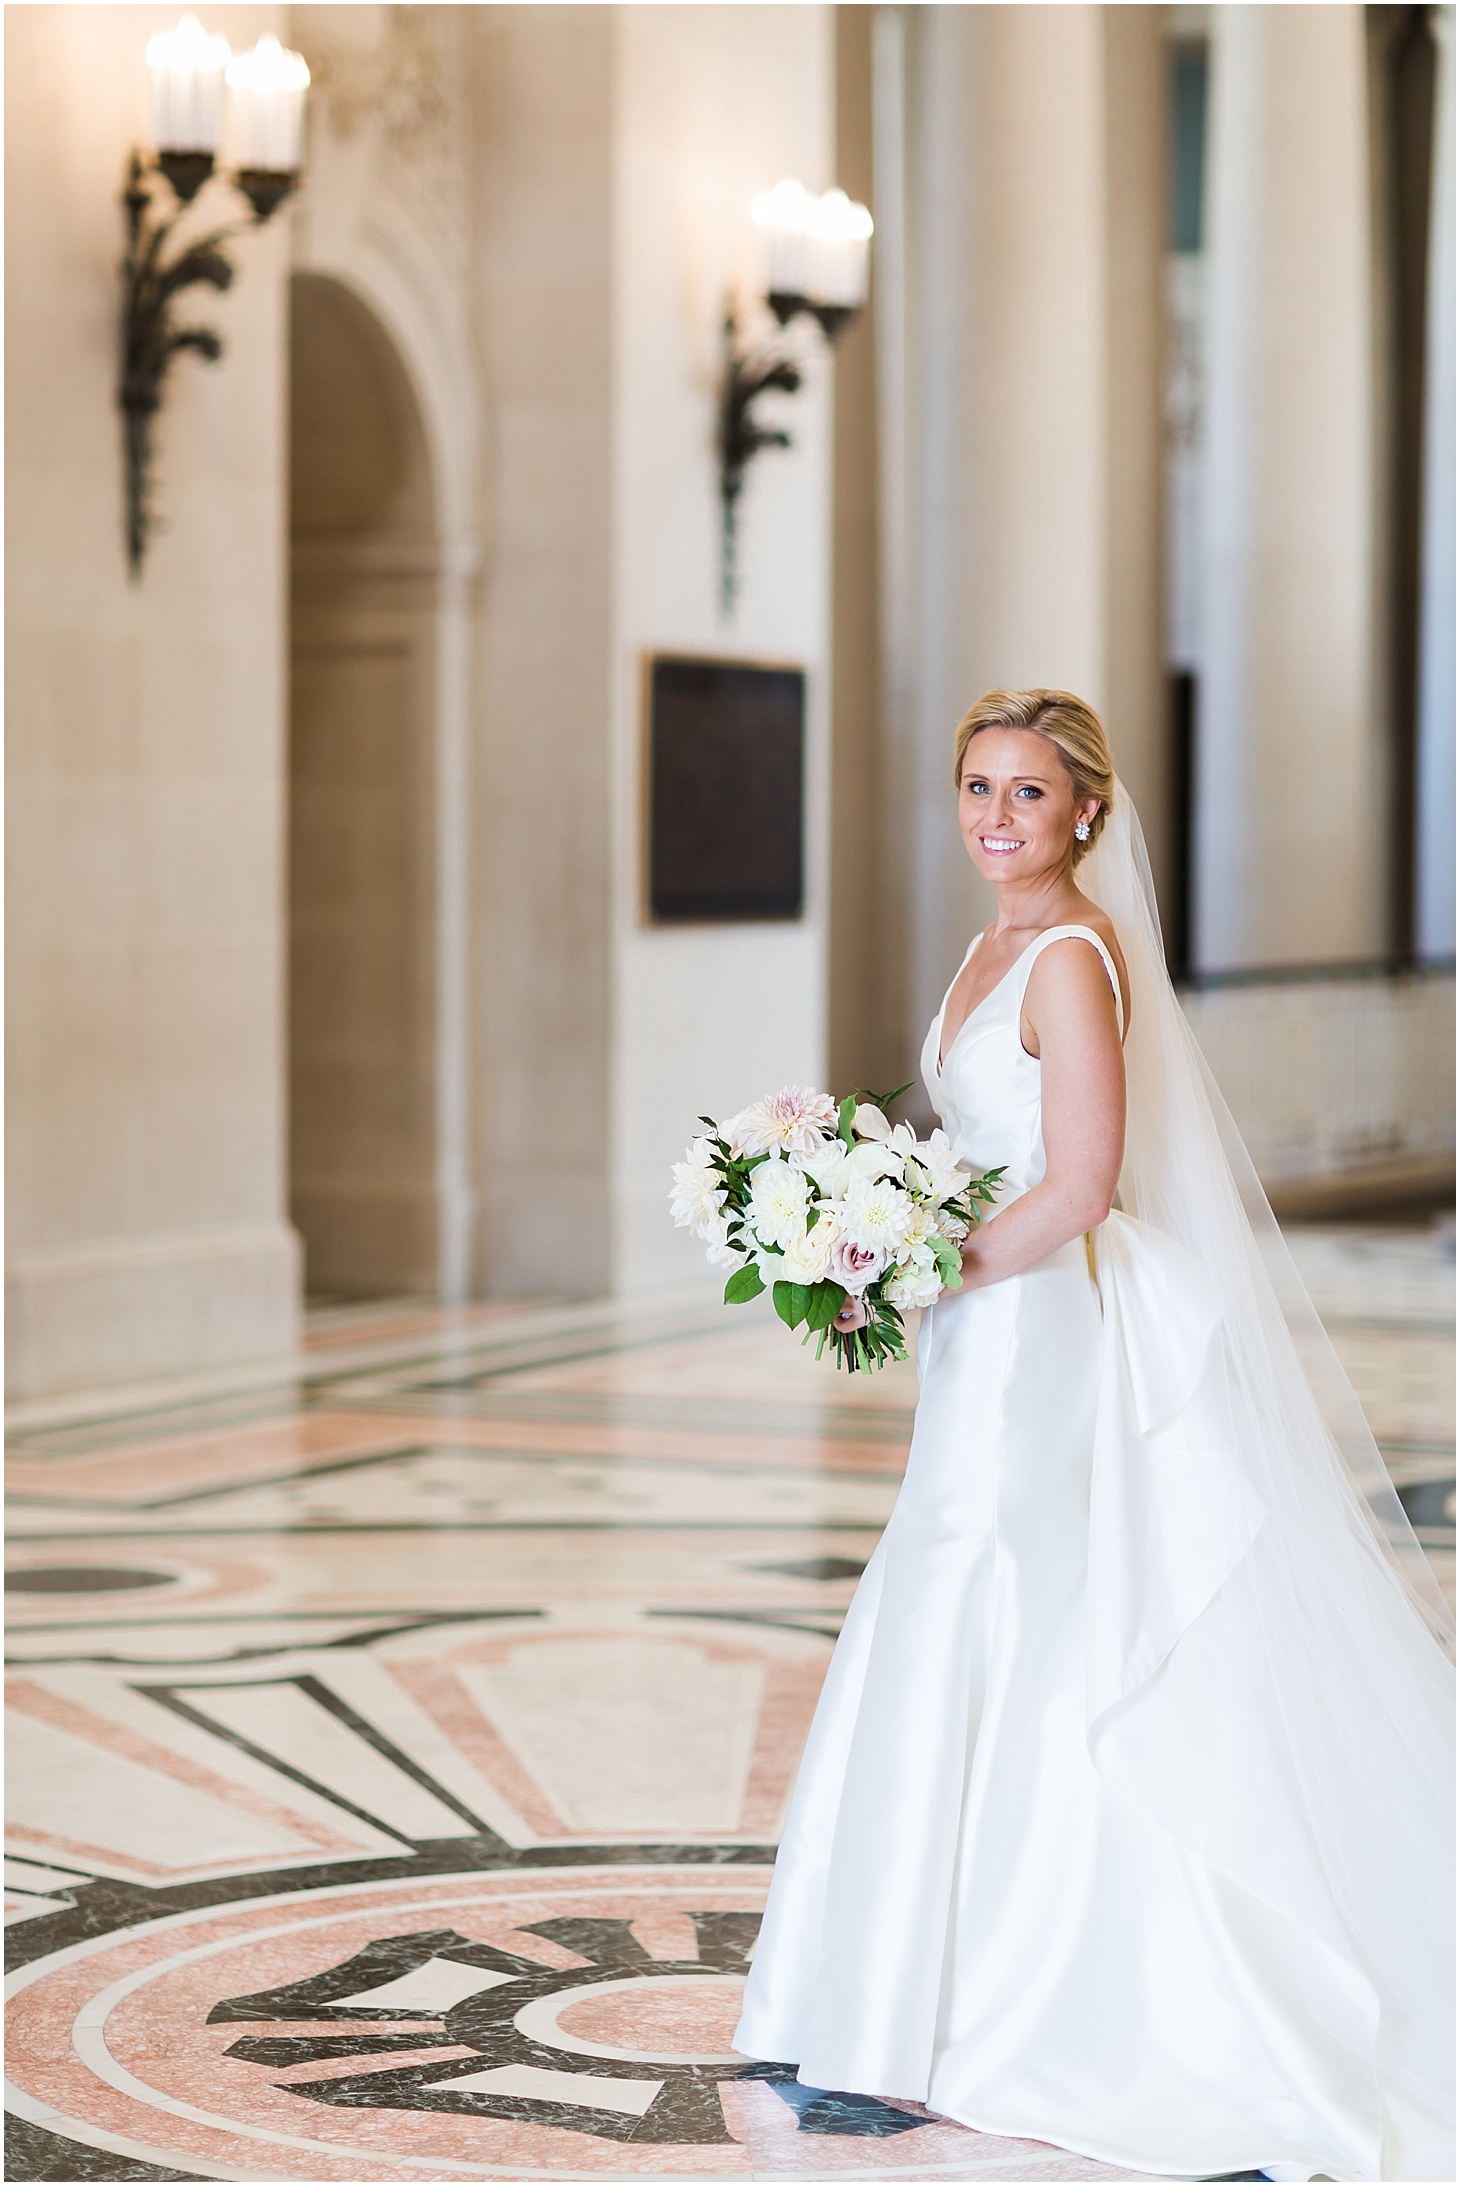 Bridal Portraits at US Naval Academy Chapel | Southern Magnolia Wedding at the Naval Academy and Gibson Island Club | Sarah Bradshaw Photography